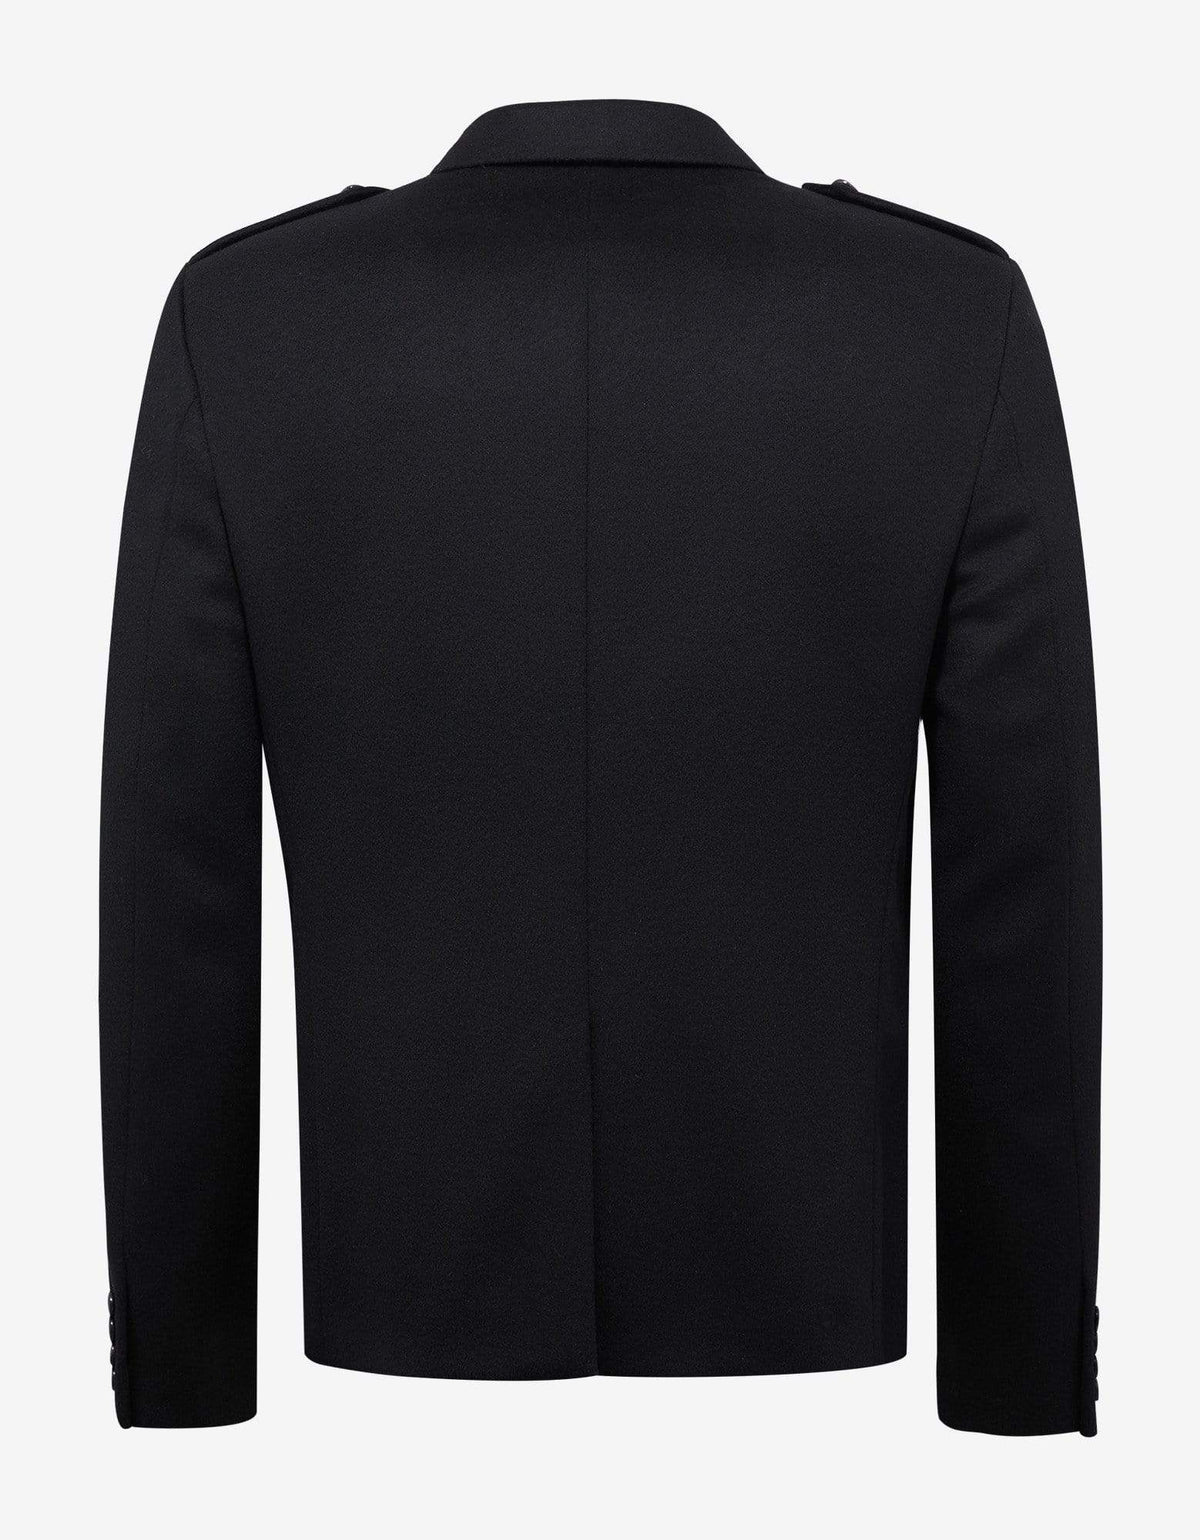 Saint Laurent Black Military Double-Breasted Wool Jacket